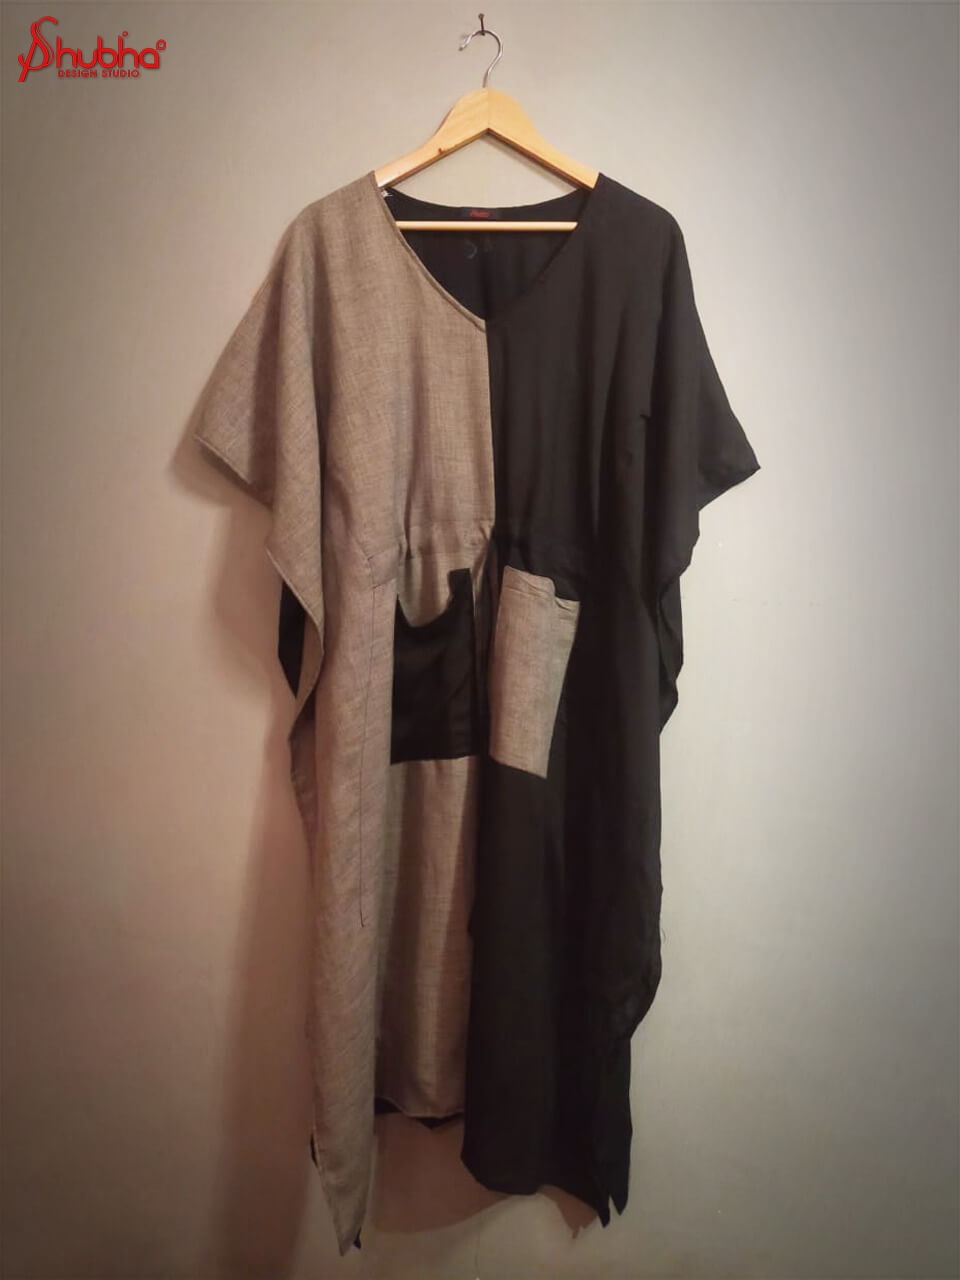 Black & grey kaftan dress with pockets